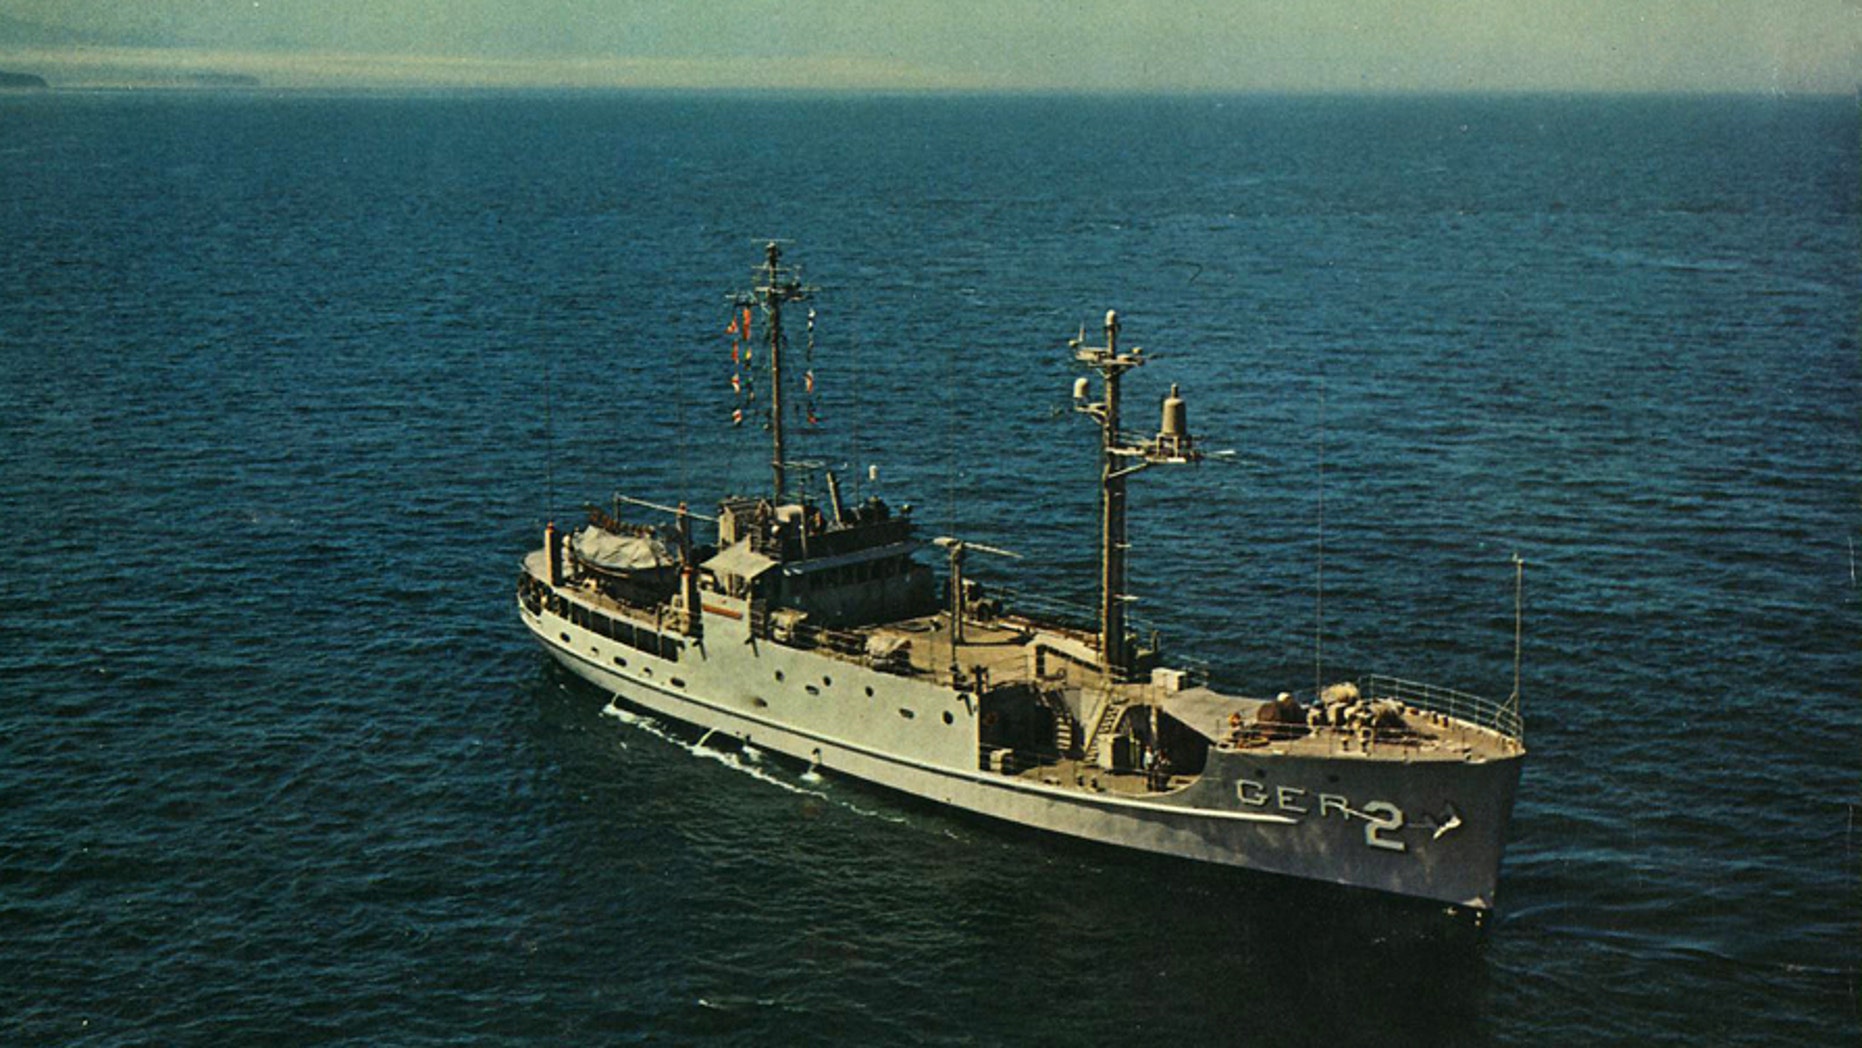 On 50th anniversary of capture by North Korea, USS Pueblo crew still feels scars | Fox News